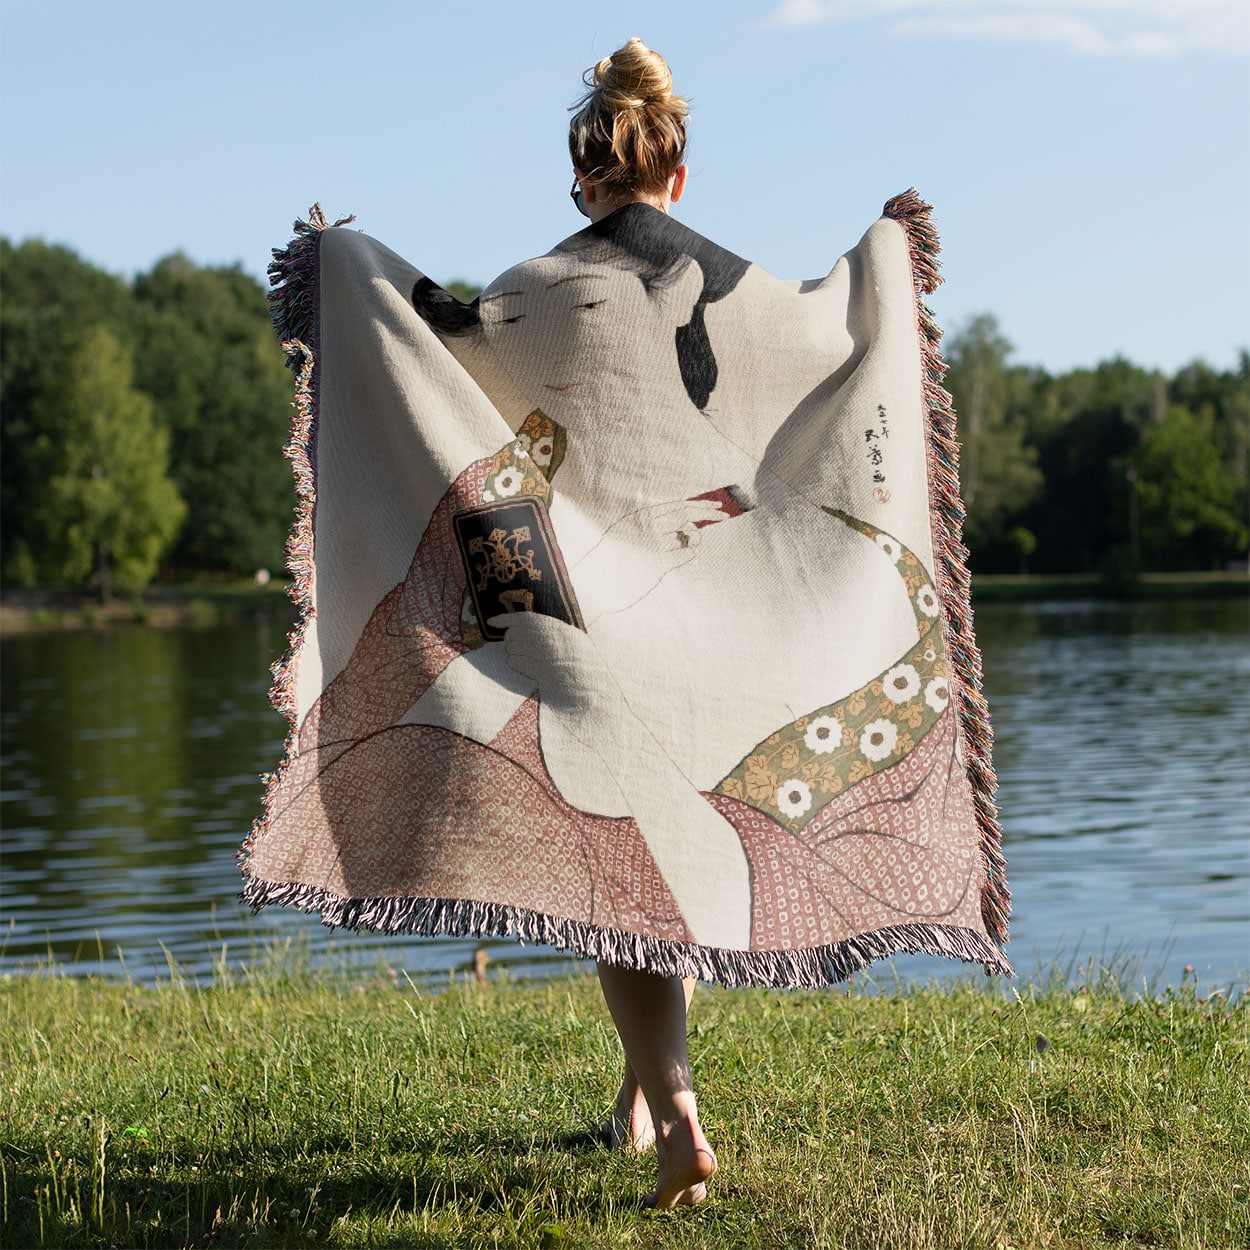 Japanese Aesthetic Woven Blanket Held on a Woman's Back Outside